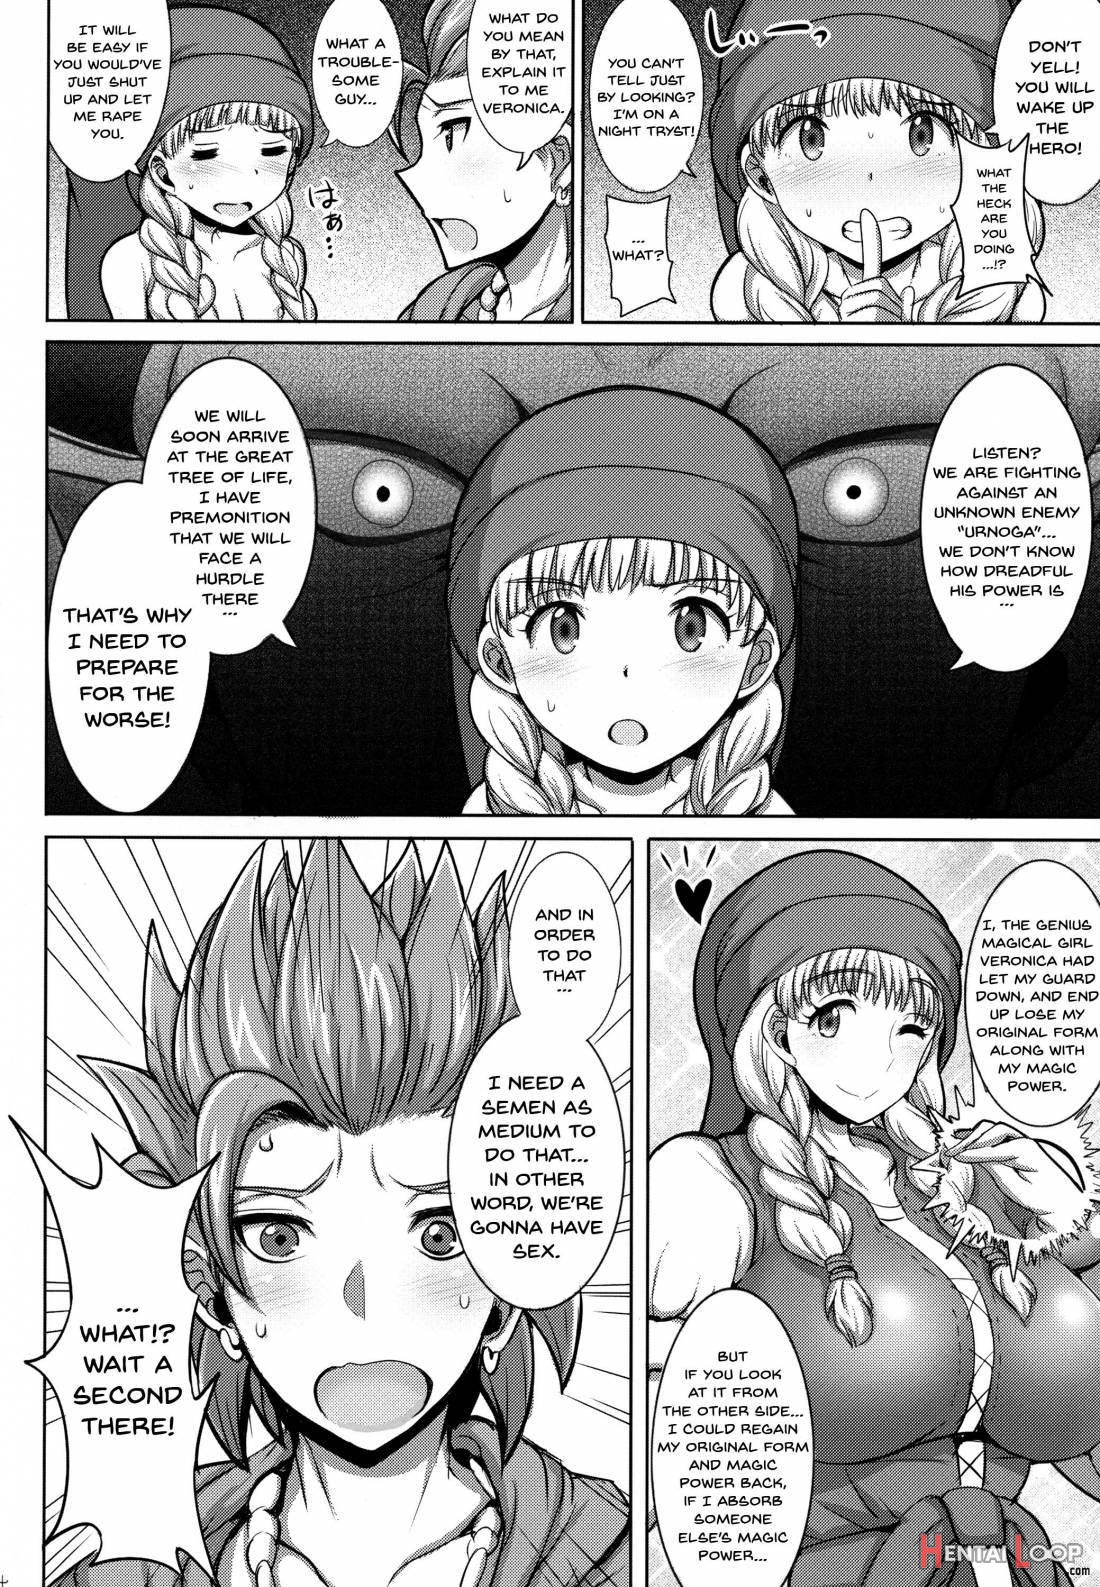 Veronica-sama Returns page 3